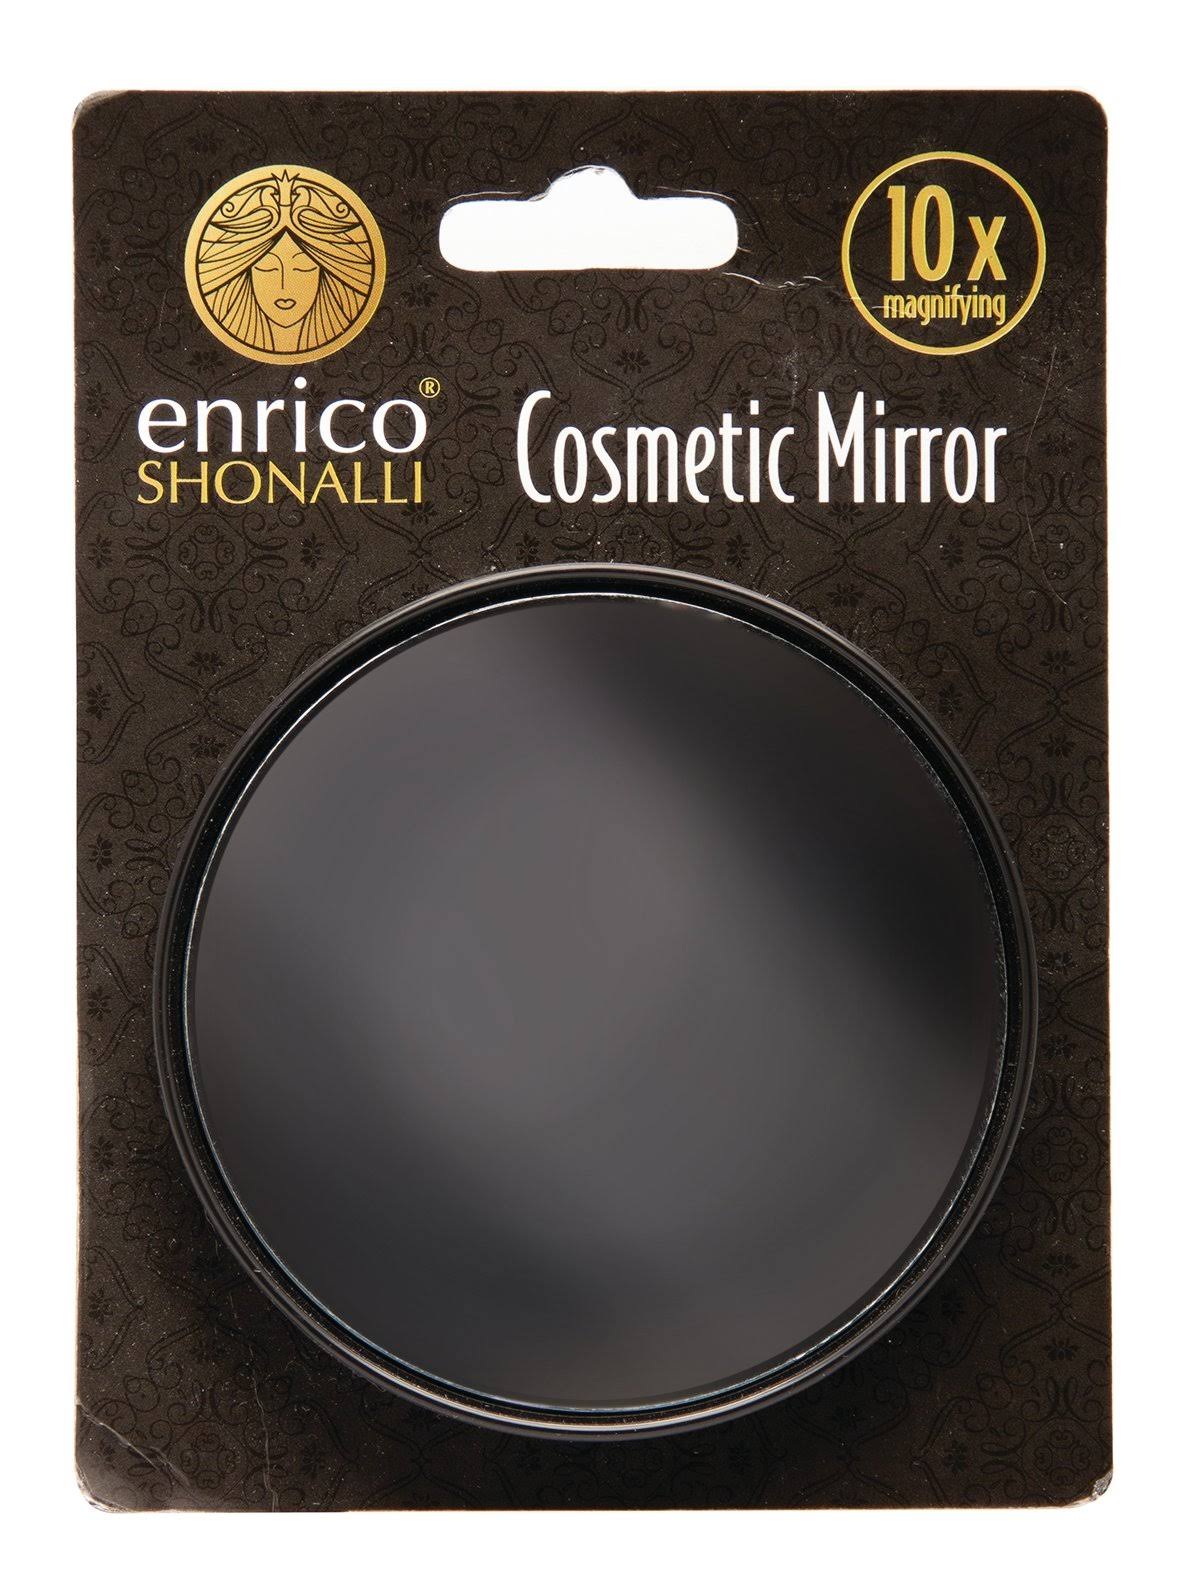 Enrico Shonalli 10x Magnifying Cosmetic MIRROR.